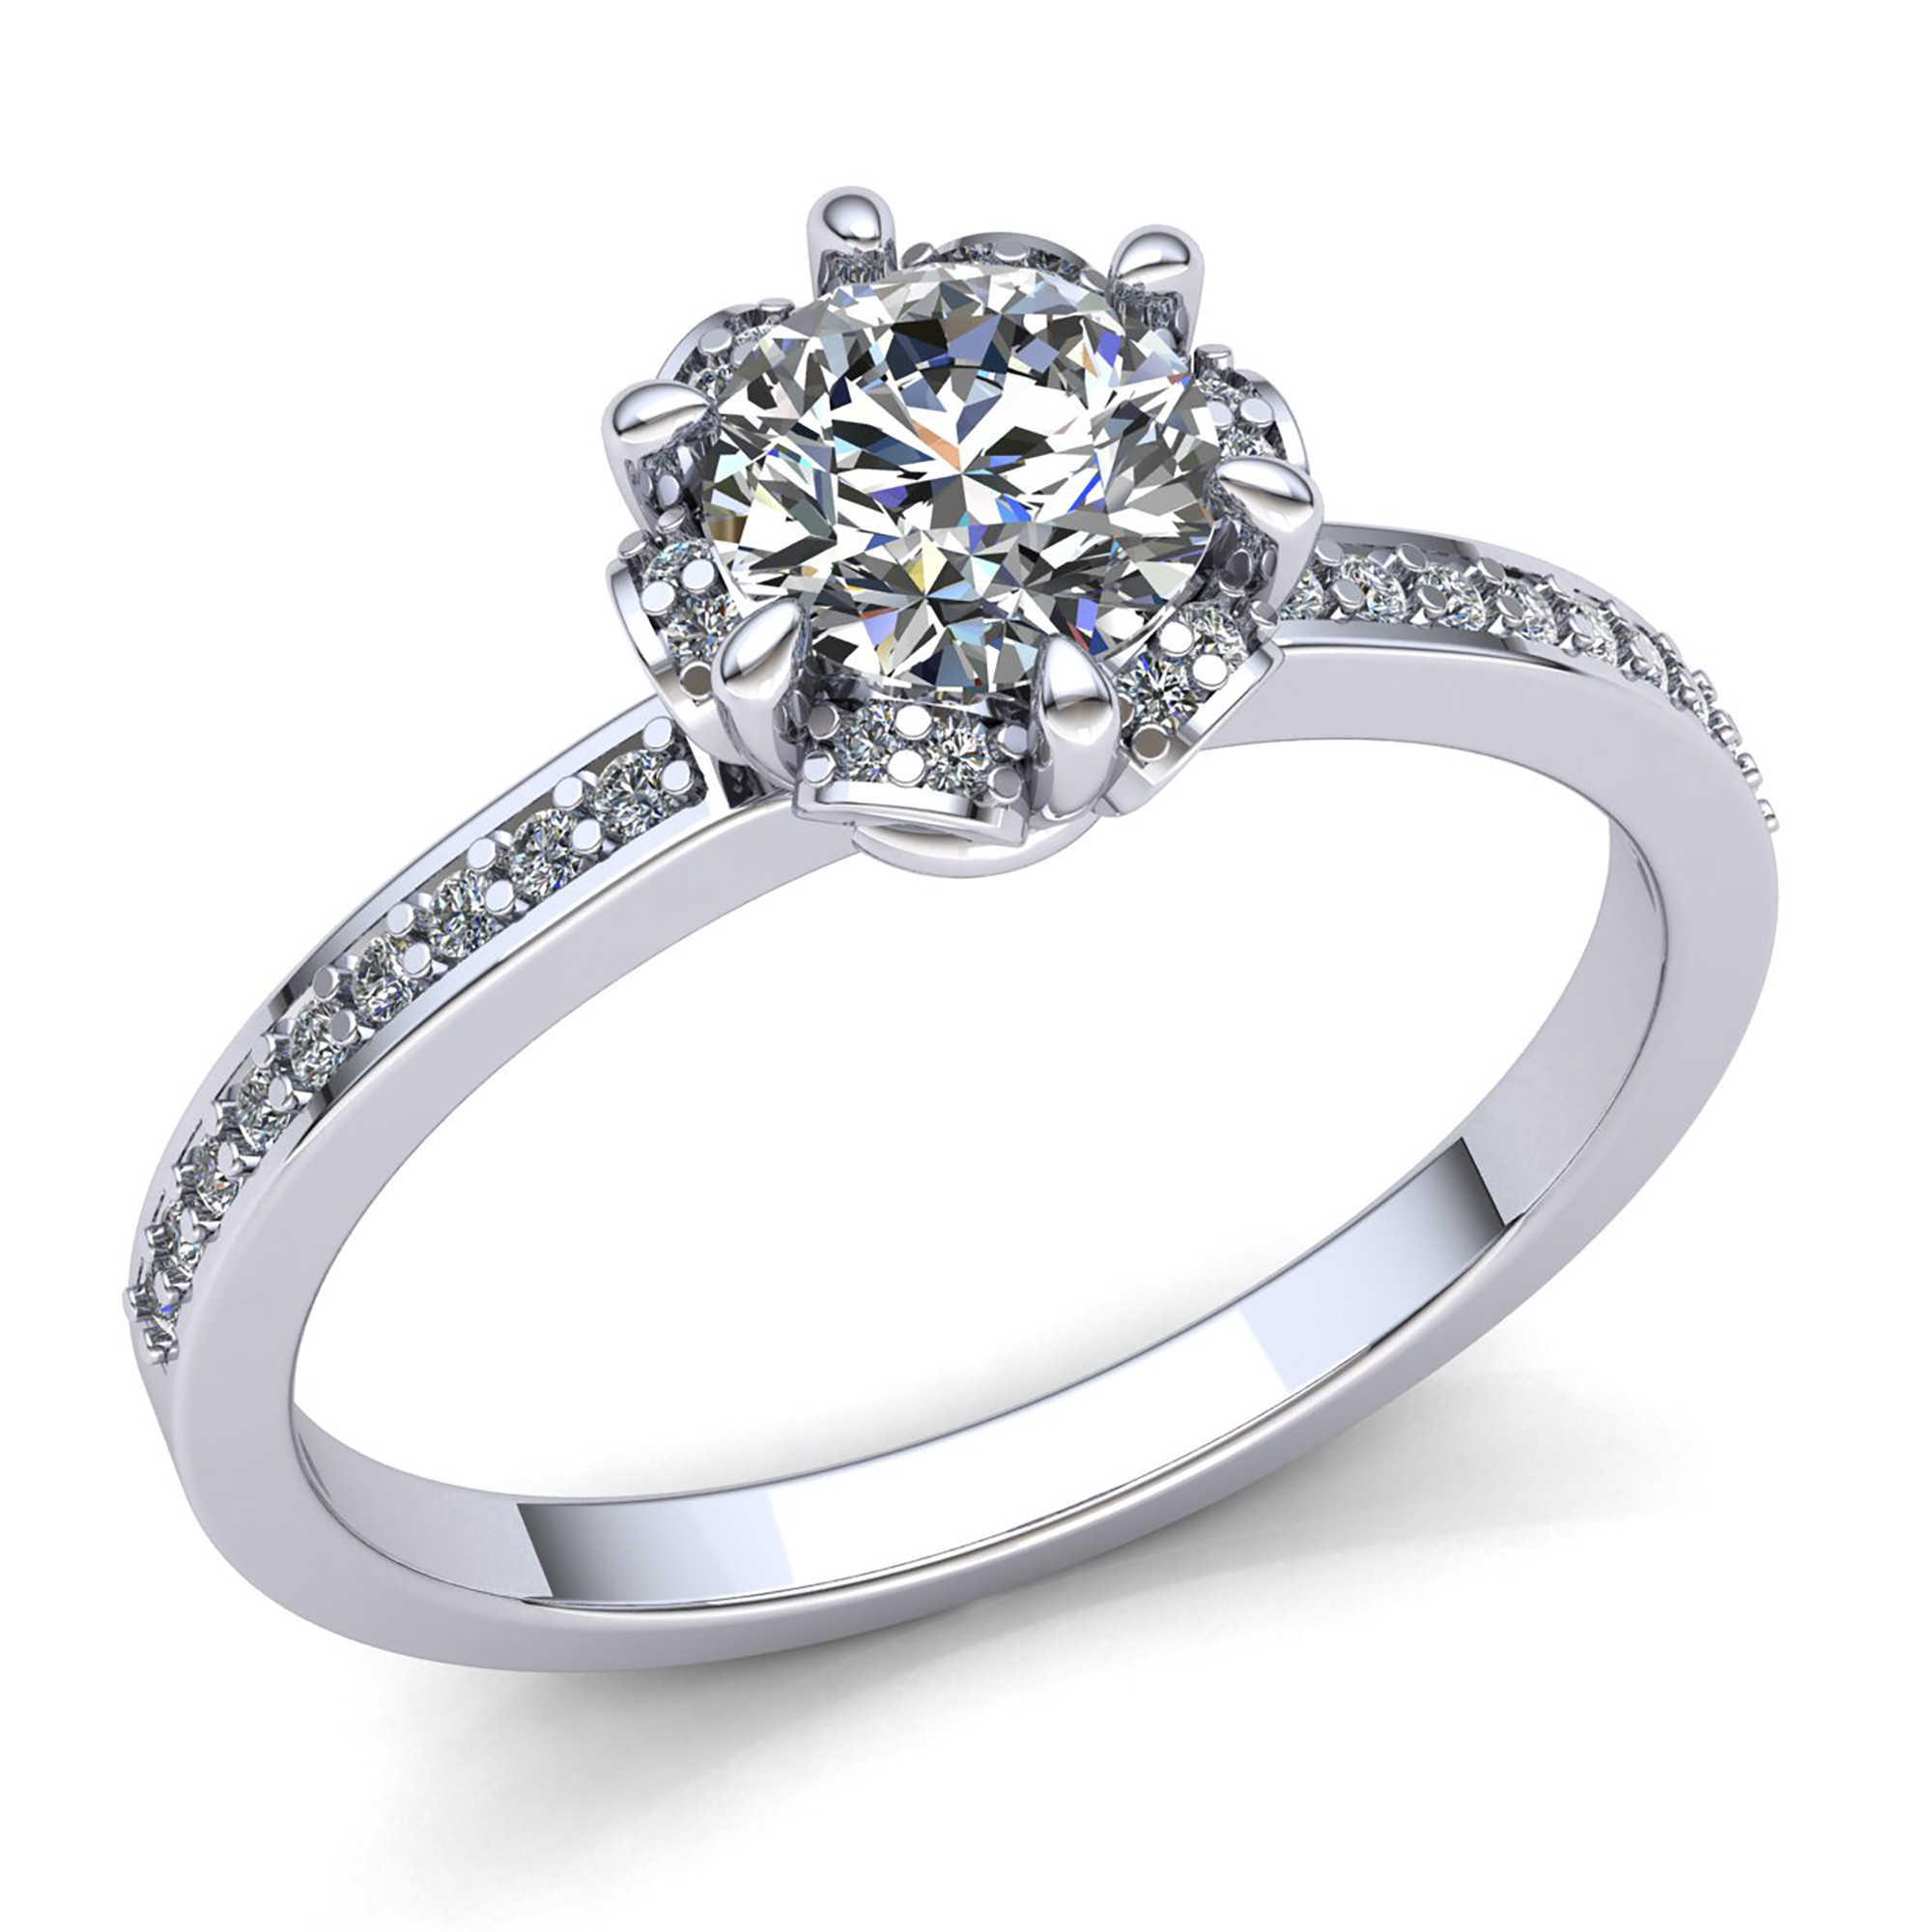 5ct Diamond Engagement Rings
 1 5ct Round Cut Diamond La s Bridal Accent Solitaire